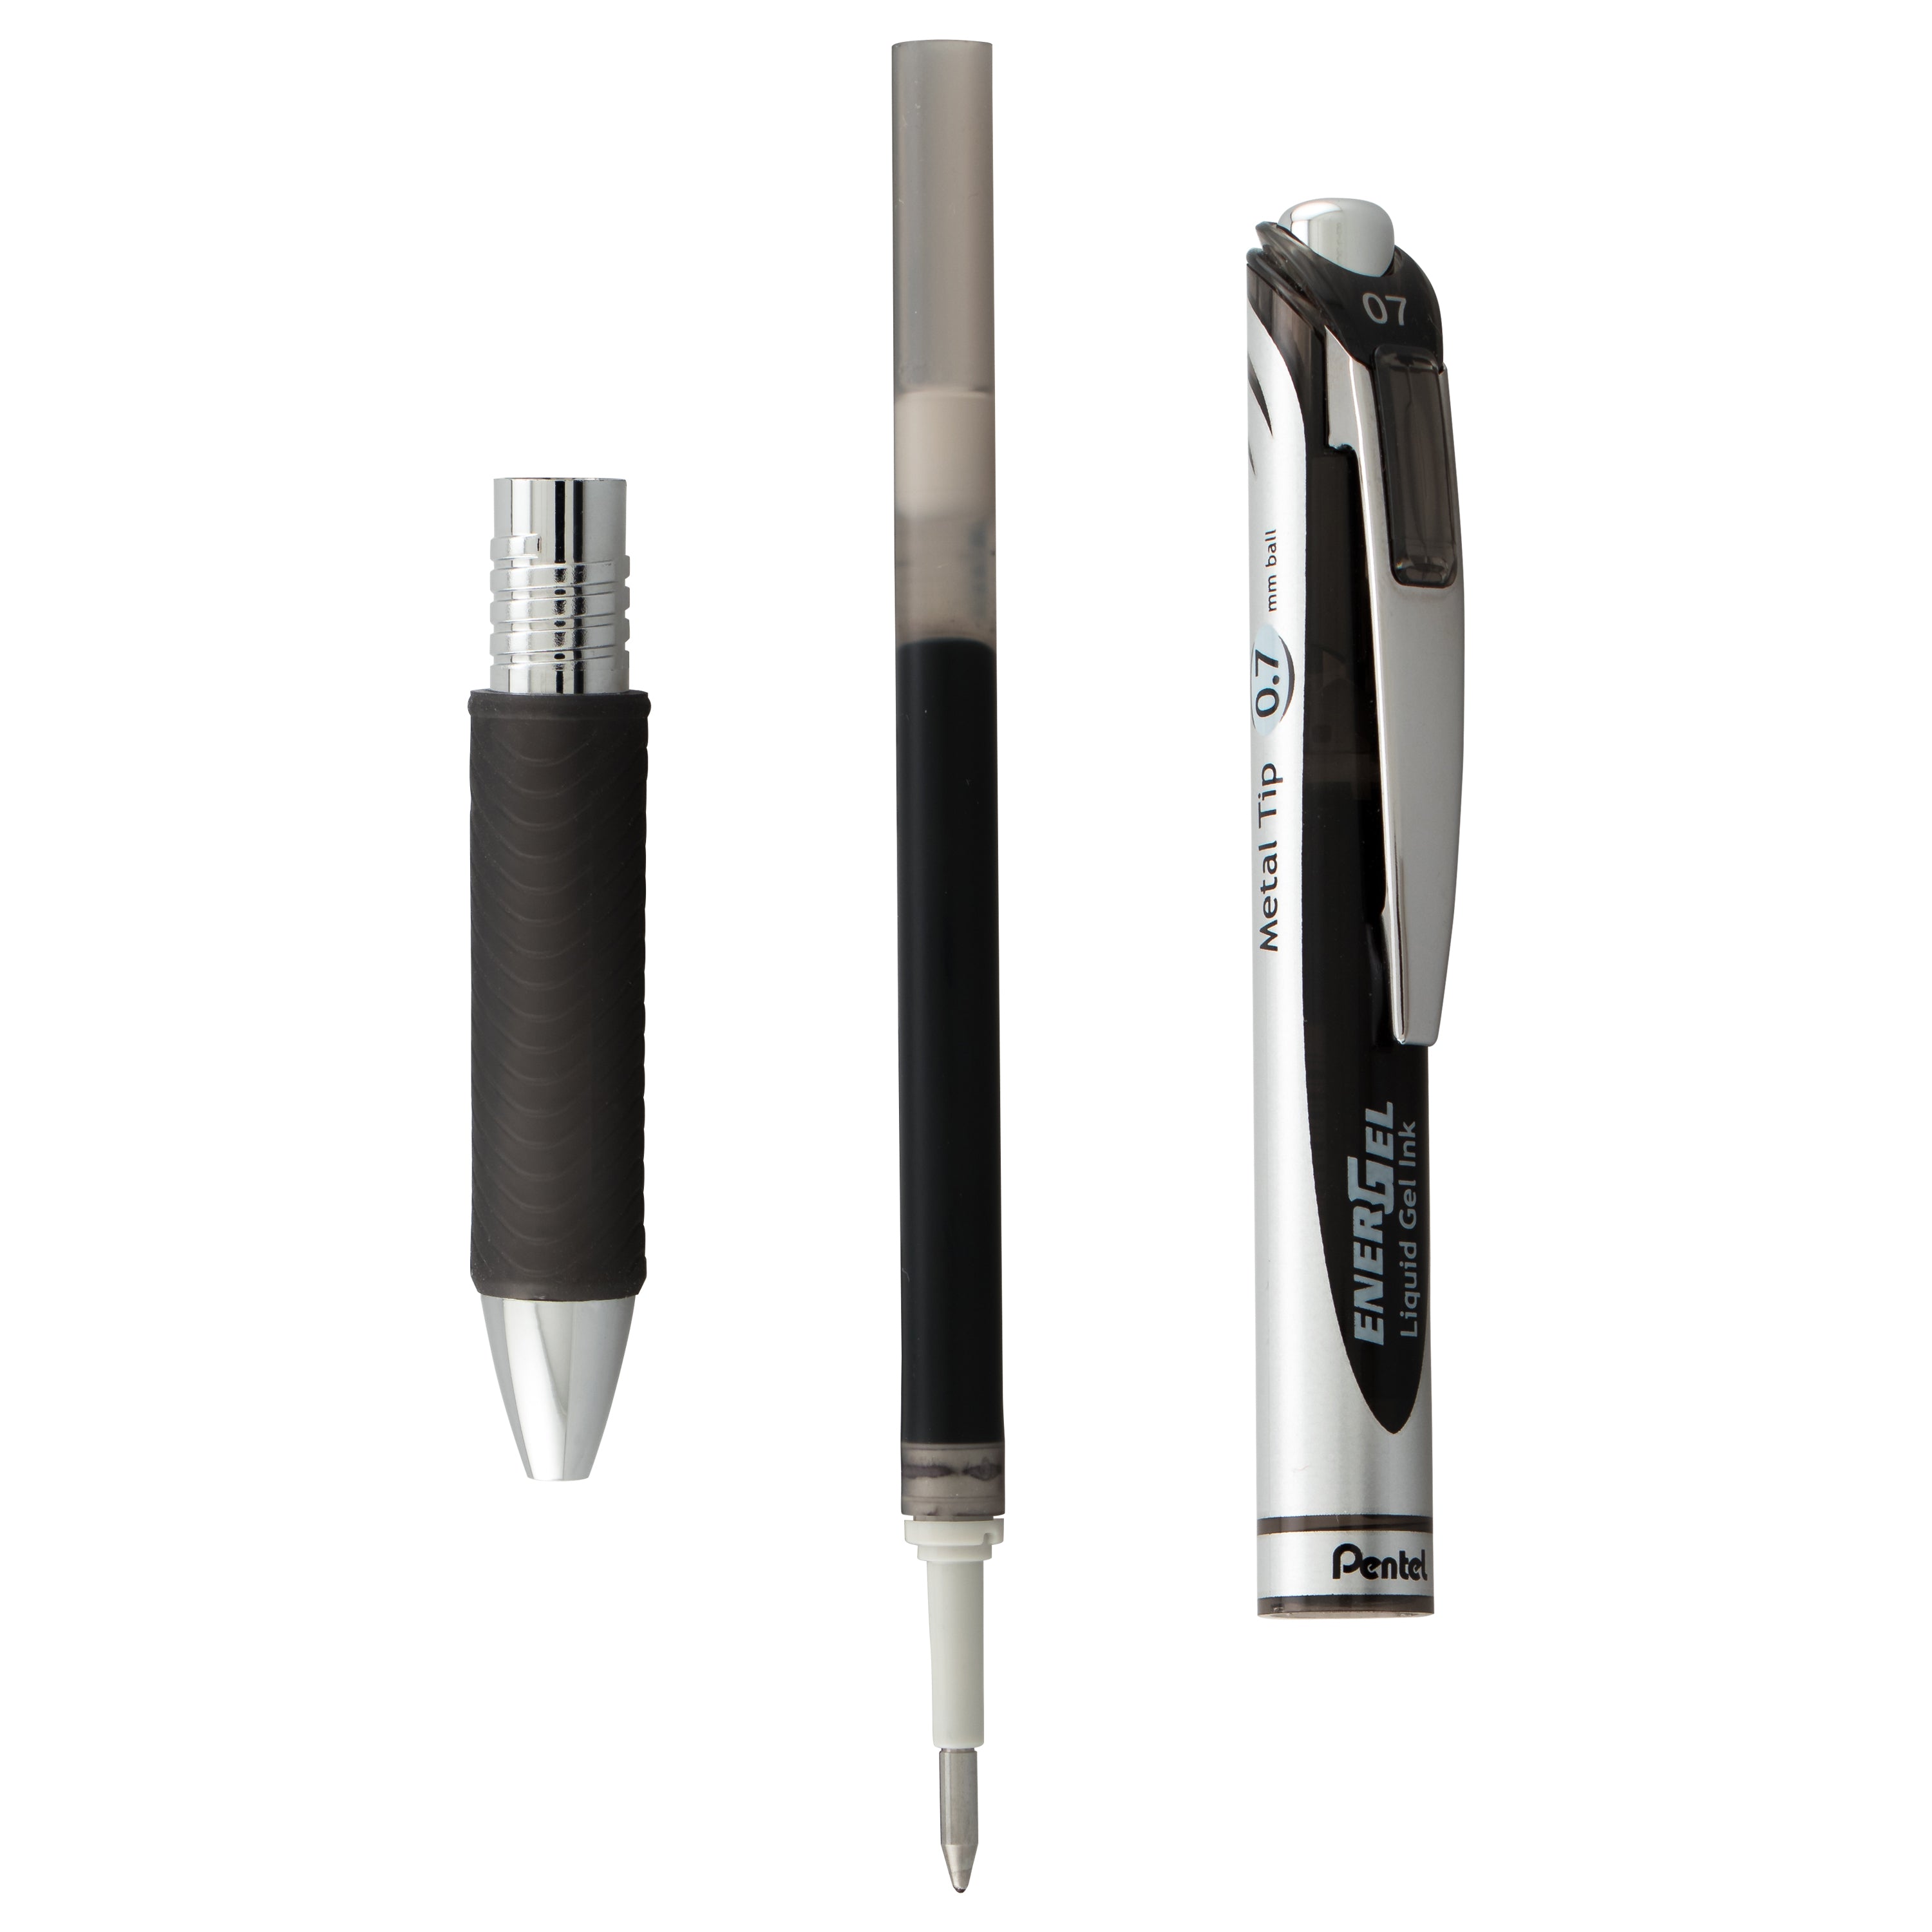 Pentel NS75 Oil-Based Pen: Versatile, Fade-Resistant Ink for